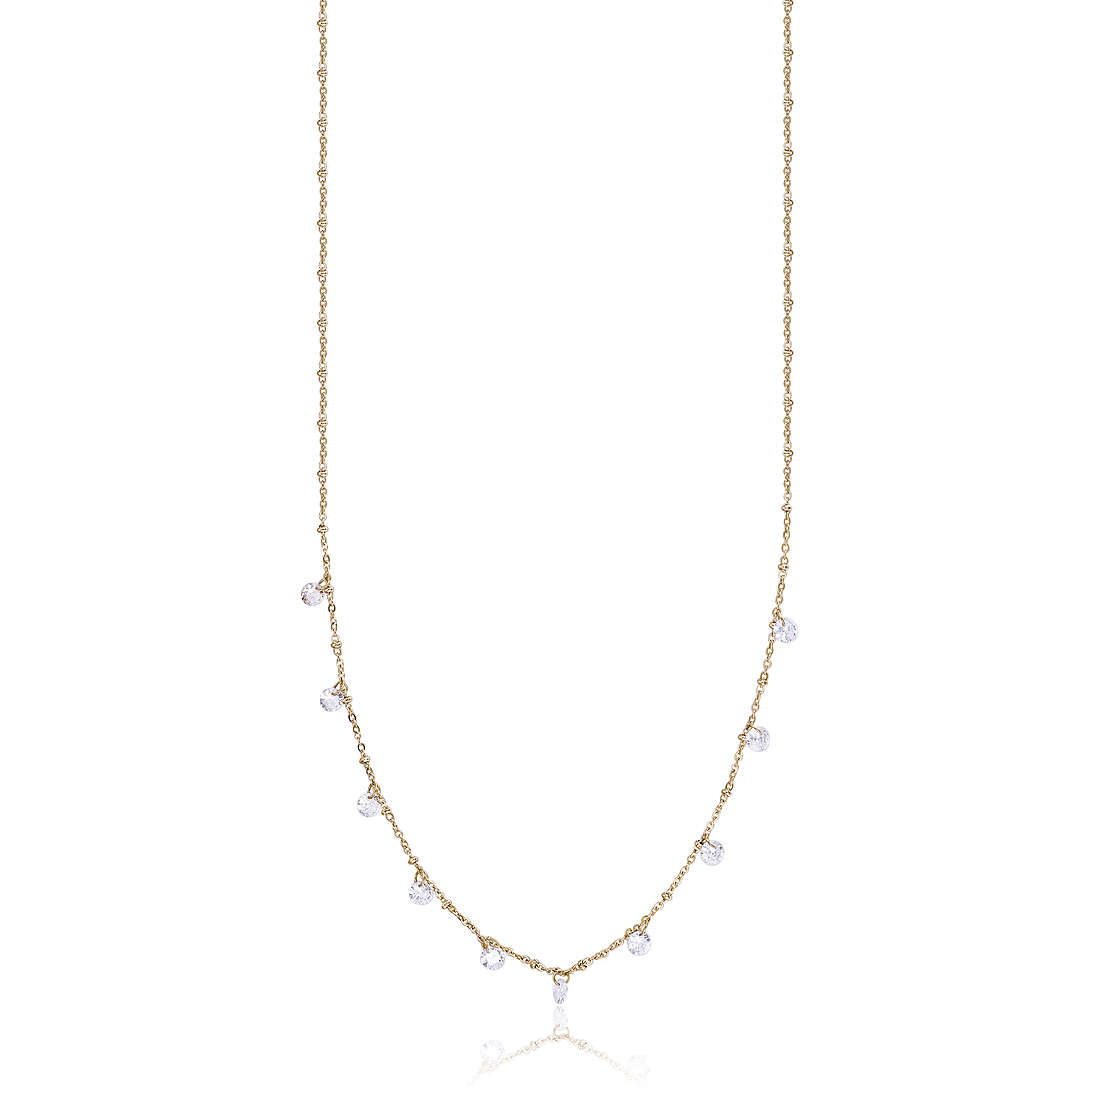 necklace Steel woman jewel Crystals CK1528